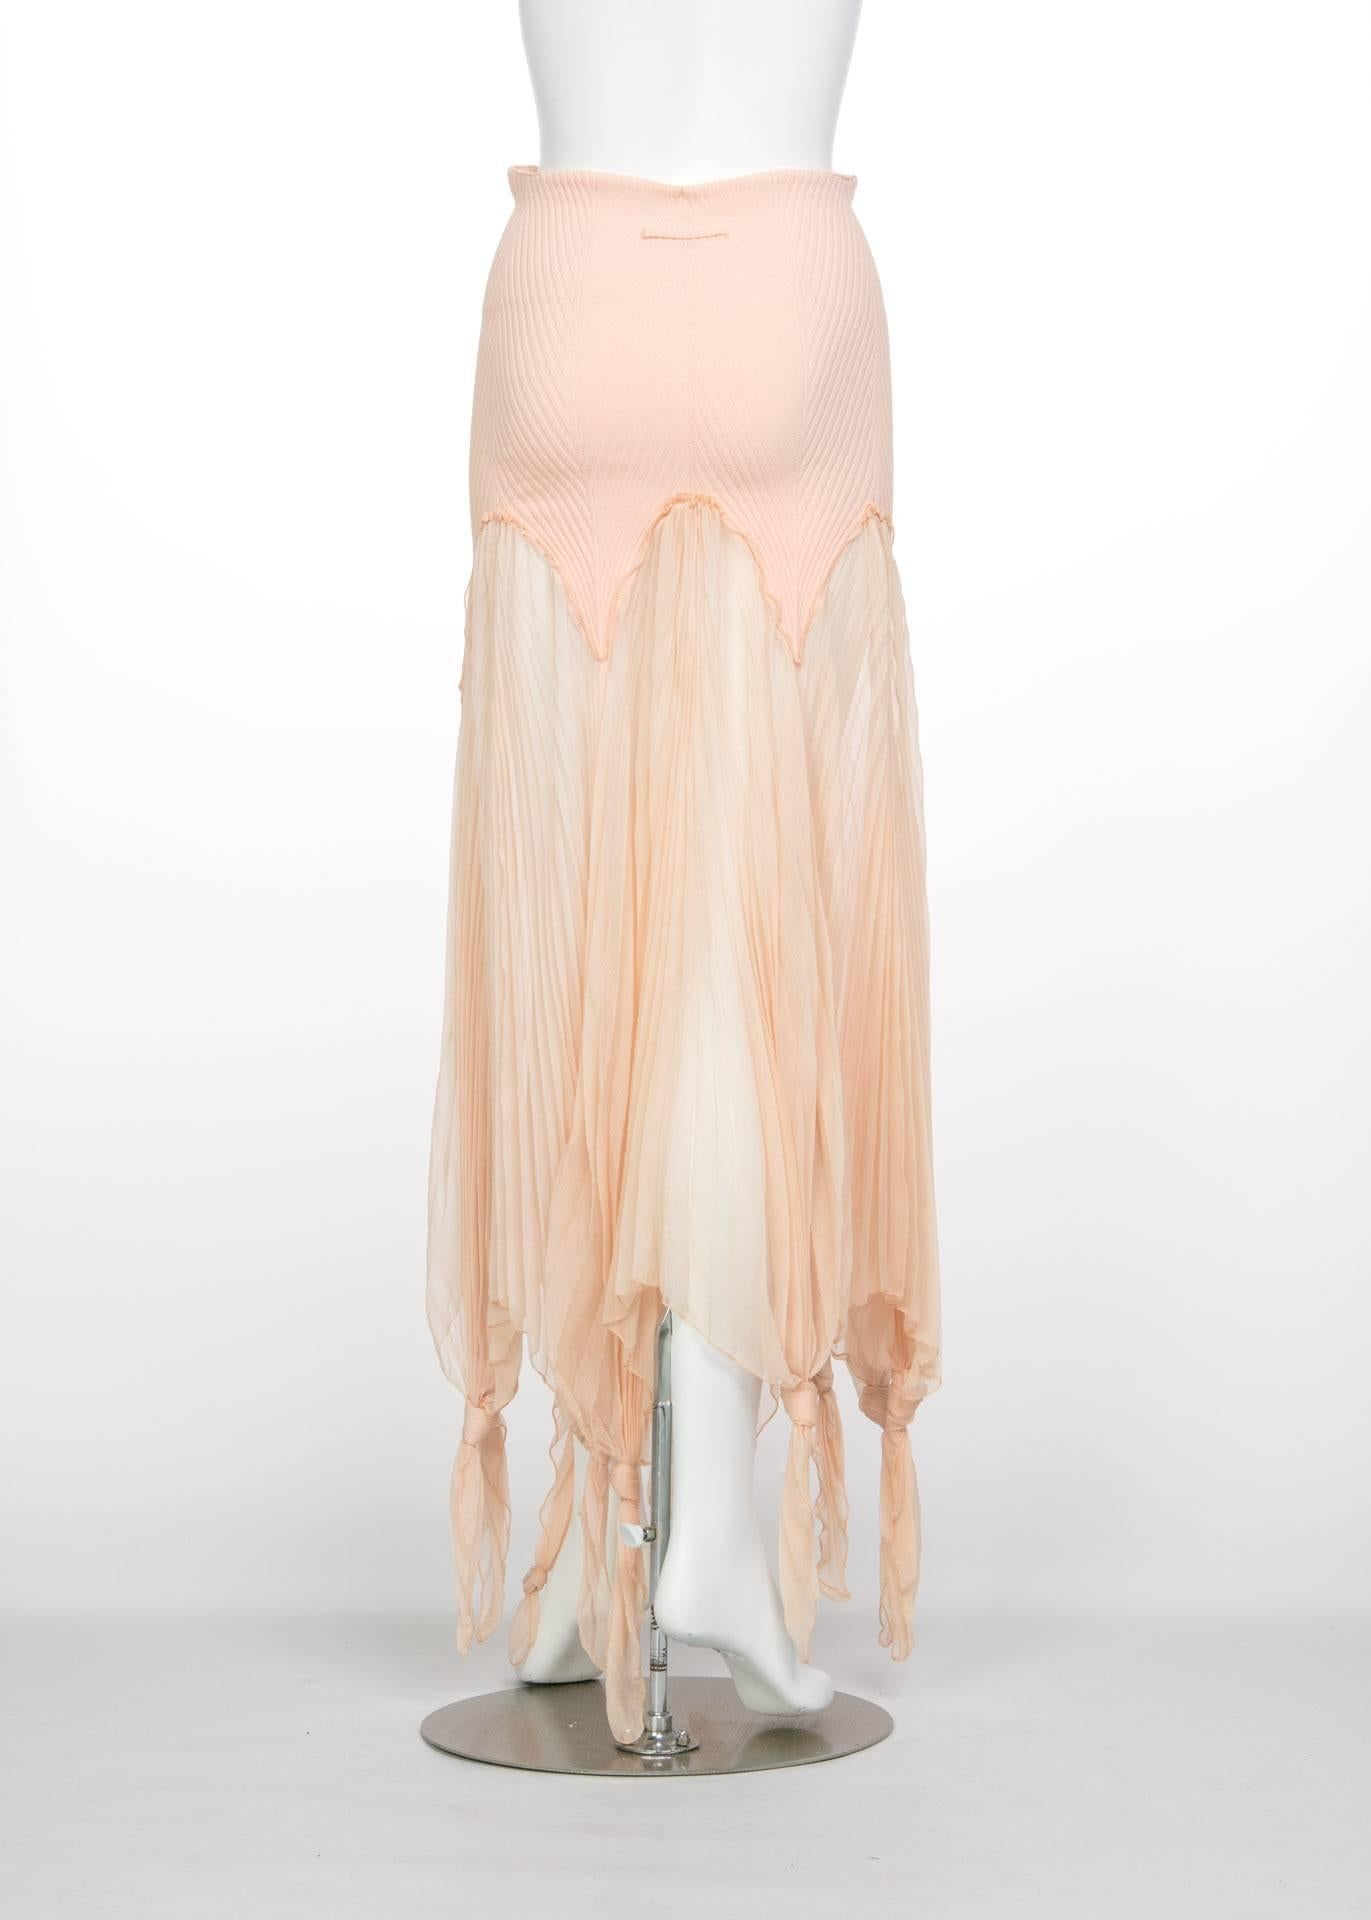 Women's Jean Paul Gaultier Blush Crinkle Silk Chiffon Rib Knit Yoke Skirt, 2000s For Sale